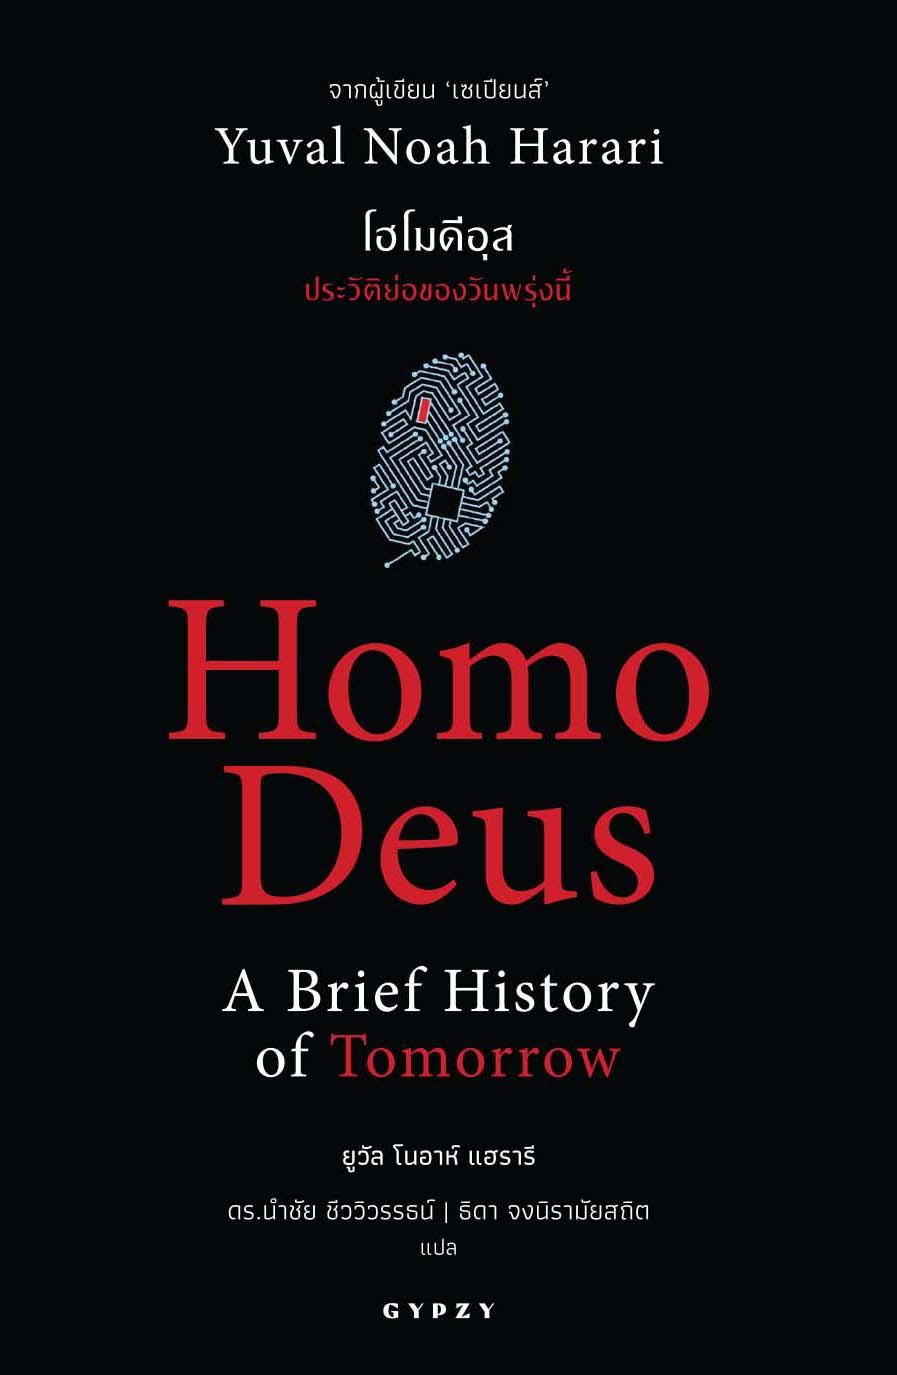 Homo Deus A Brief History of Tomorrow โฮโมดีอุส ประวัติย่อของวันพรุ่งนี้